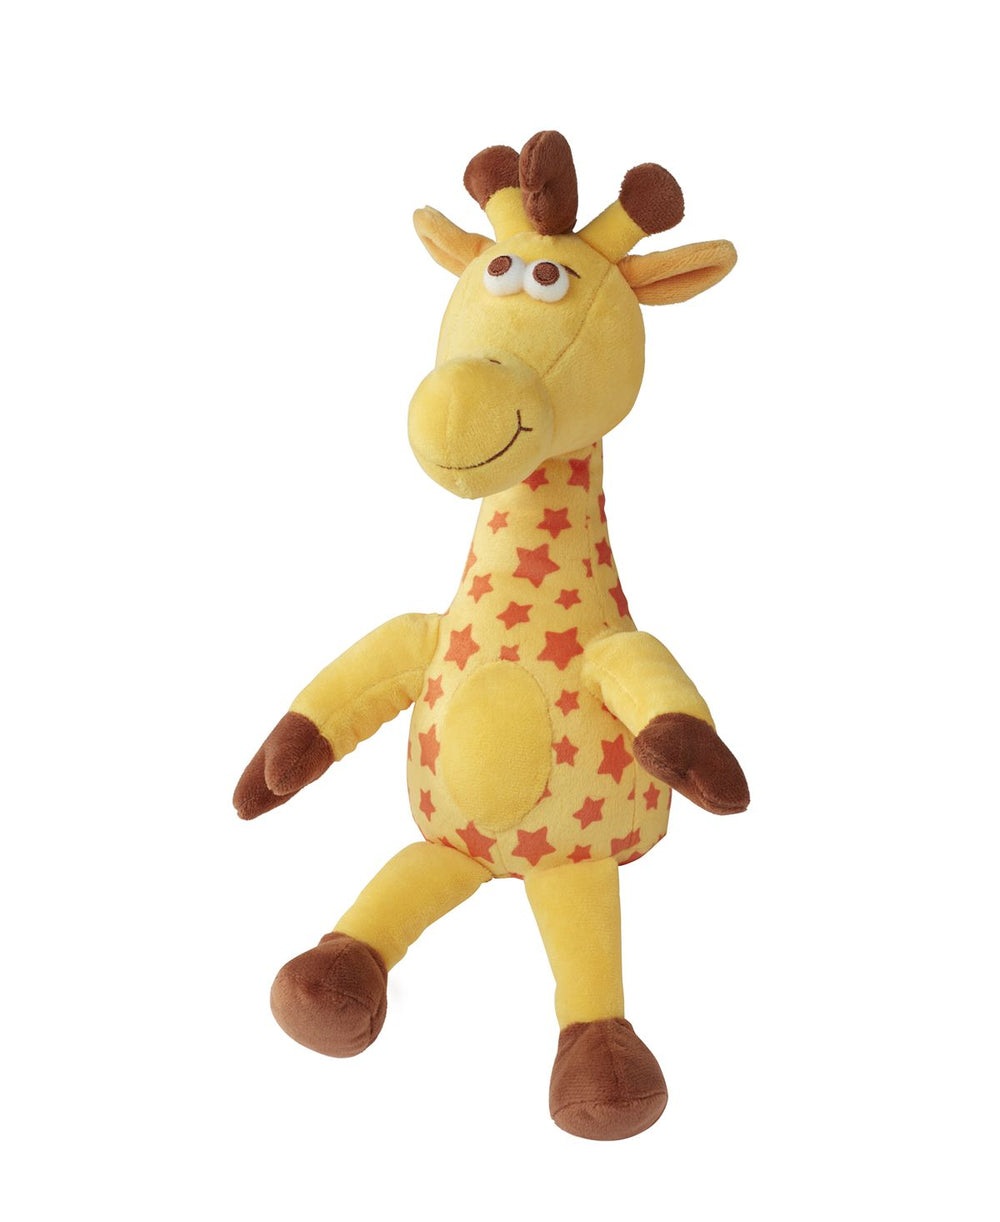 Toys R Us Exclusive Geoffrey Plush 9 Inch - Soft and Snuggly Giraffe